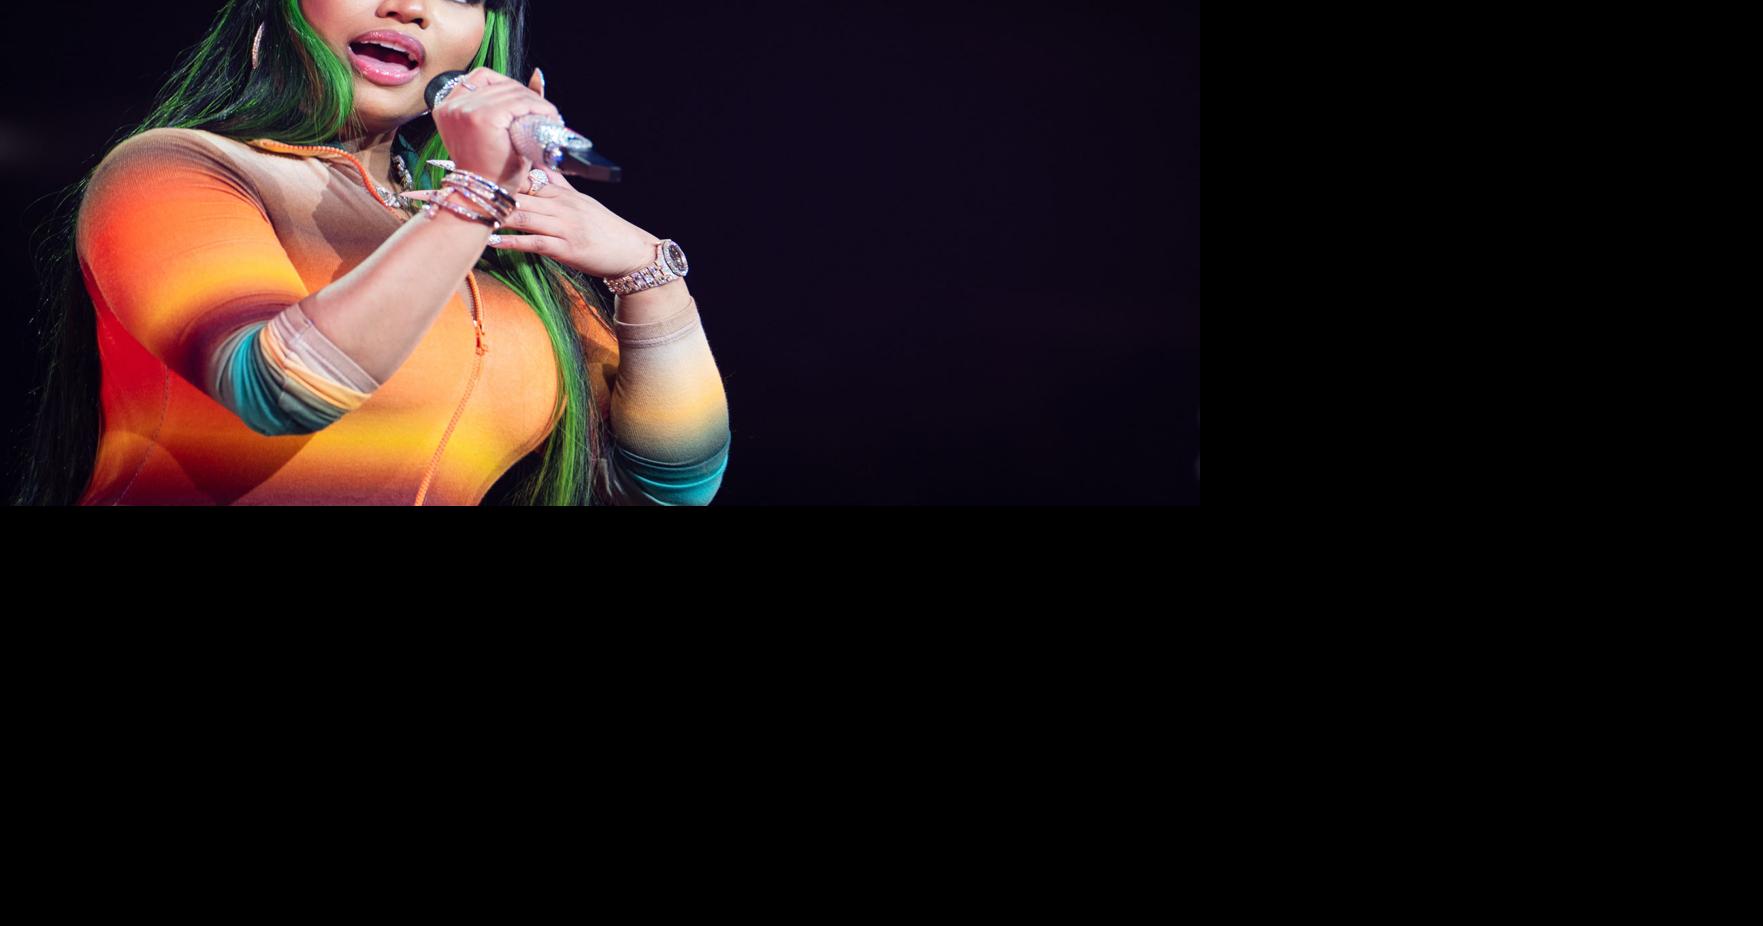 Powerhouse concert brings out Nicki Minaj and more to honor slain